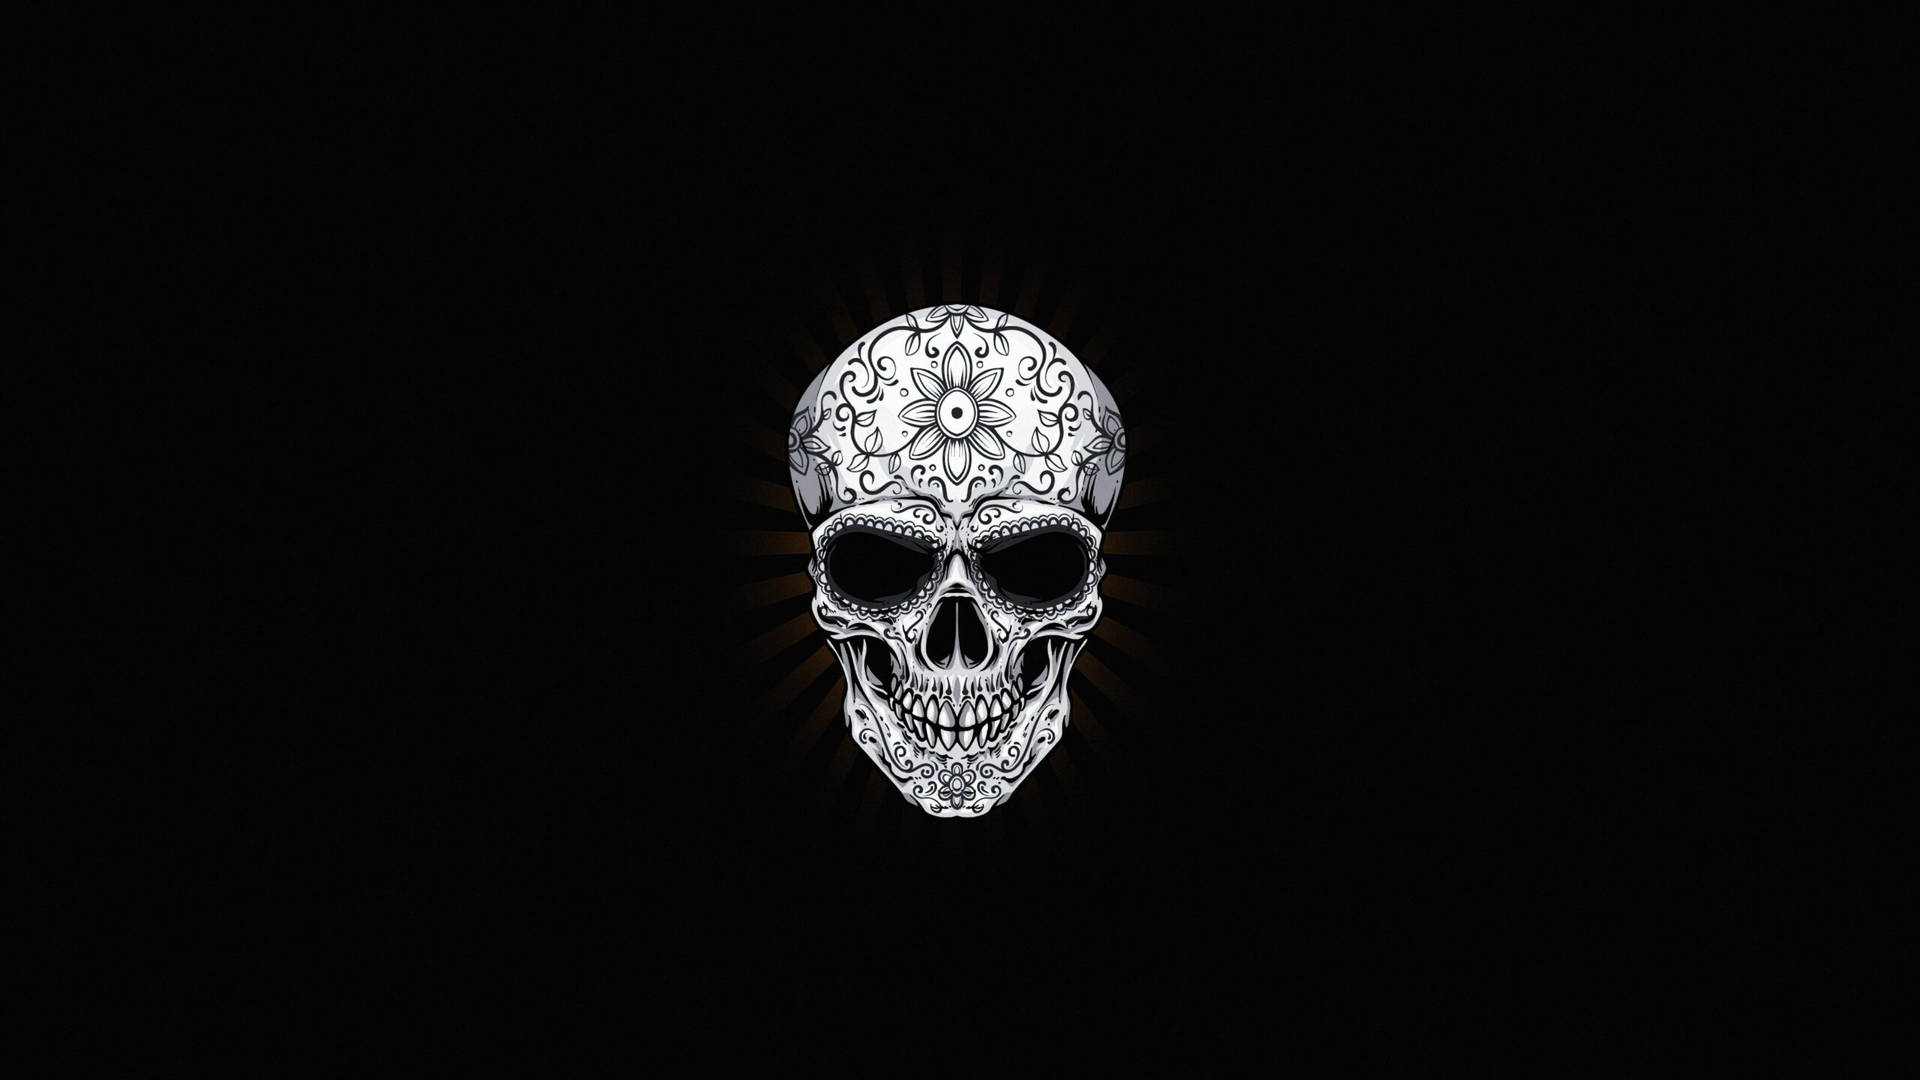 A Skull On A Black Background Background